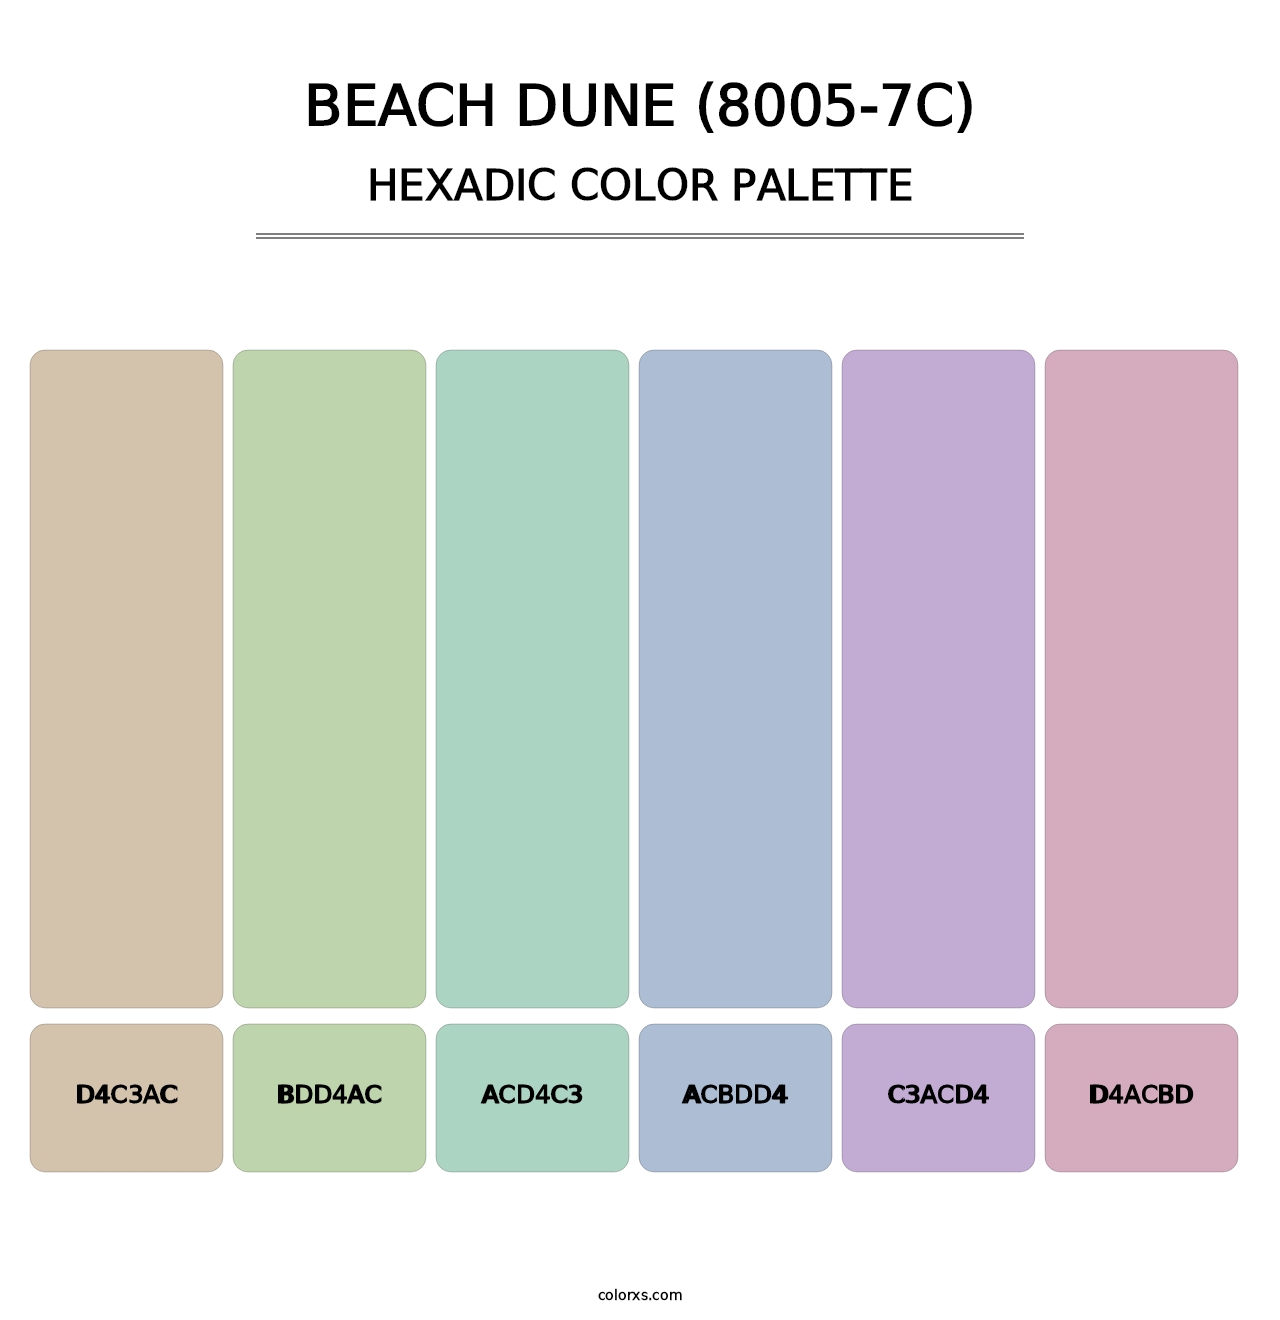 Beach Dune (8005-7C) - Hexadic Color Palette